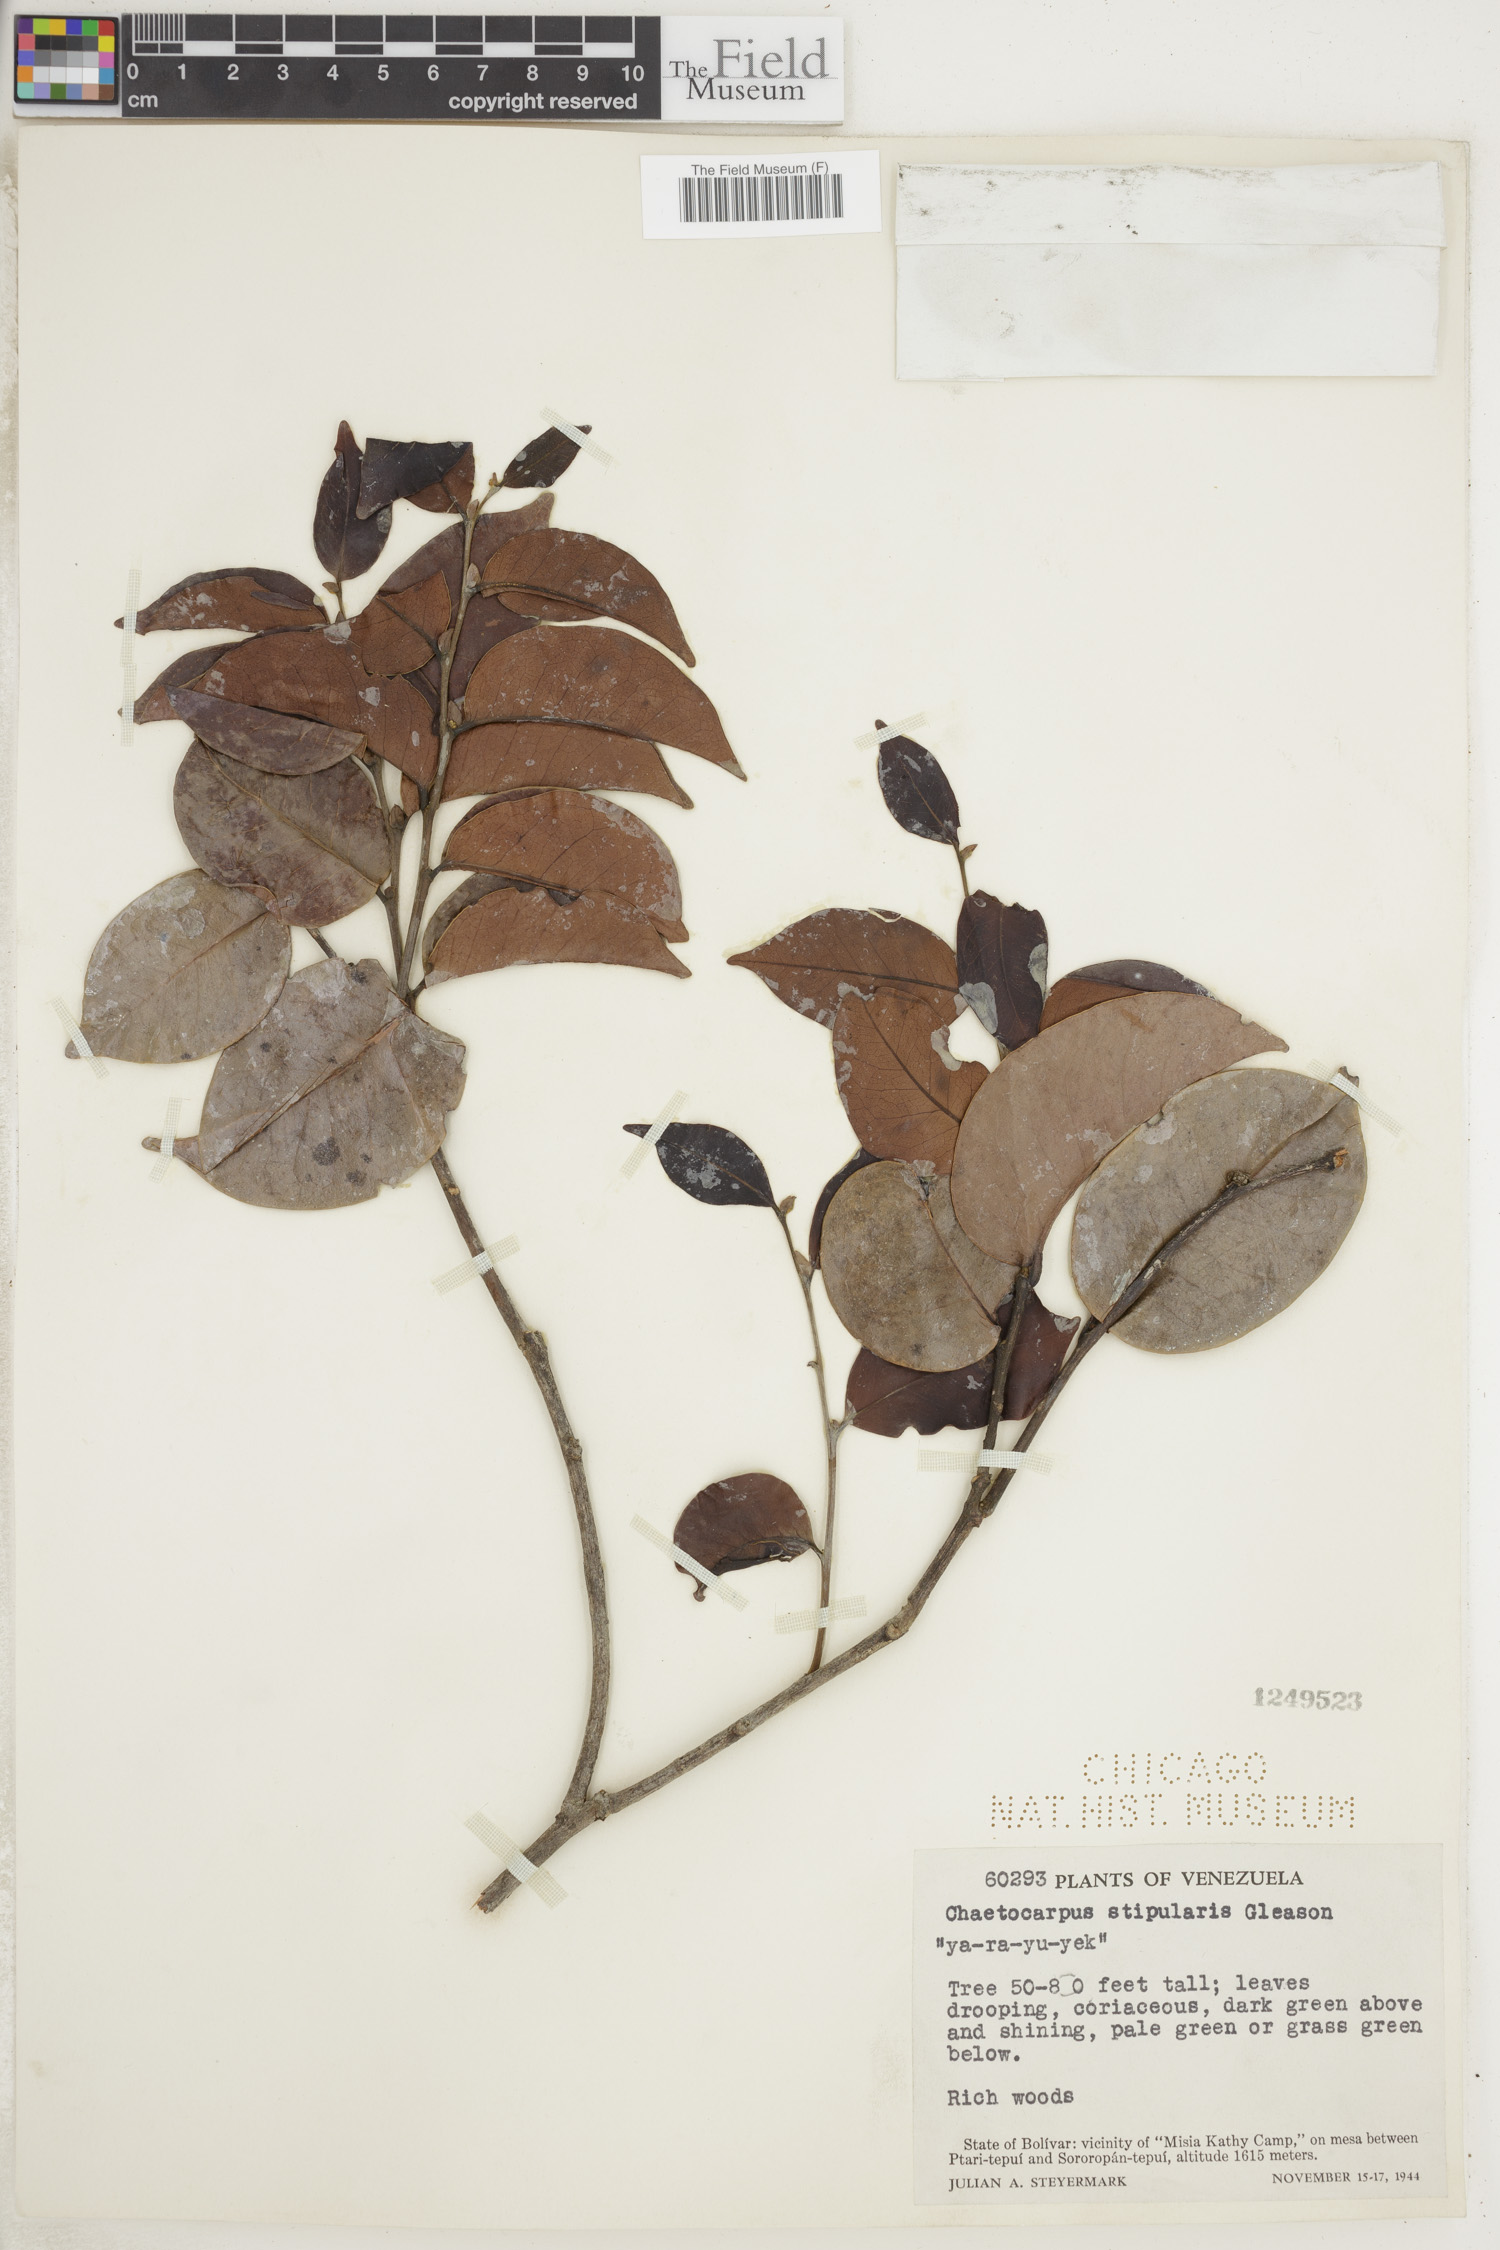 Chaetocarpus image